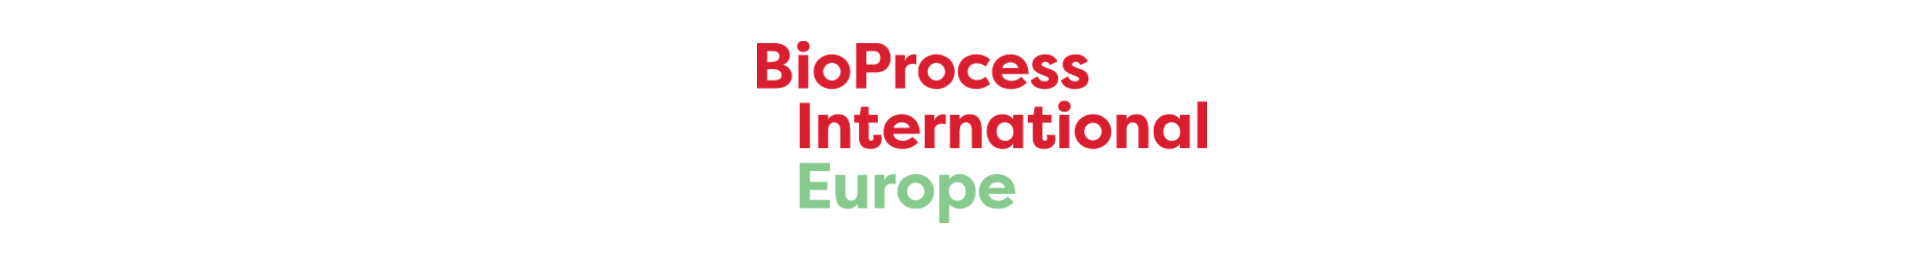 BioProcess International Europe 2020